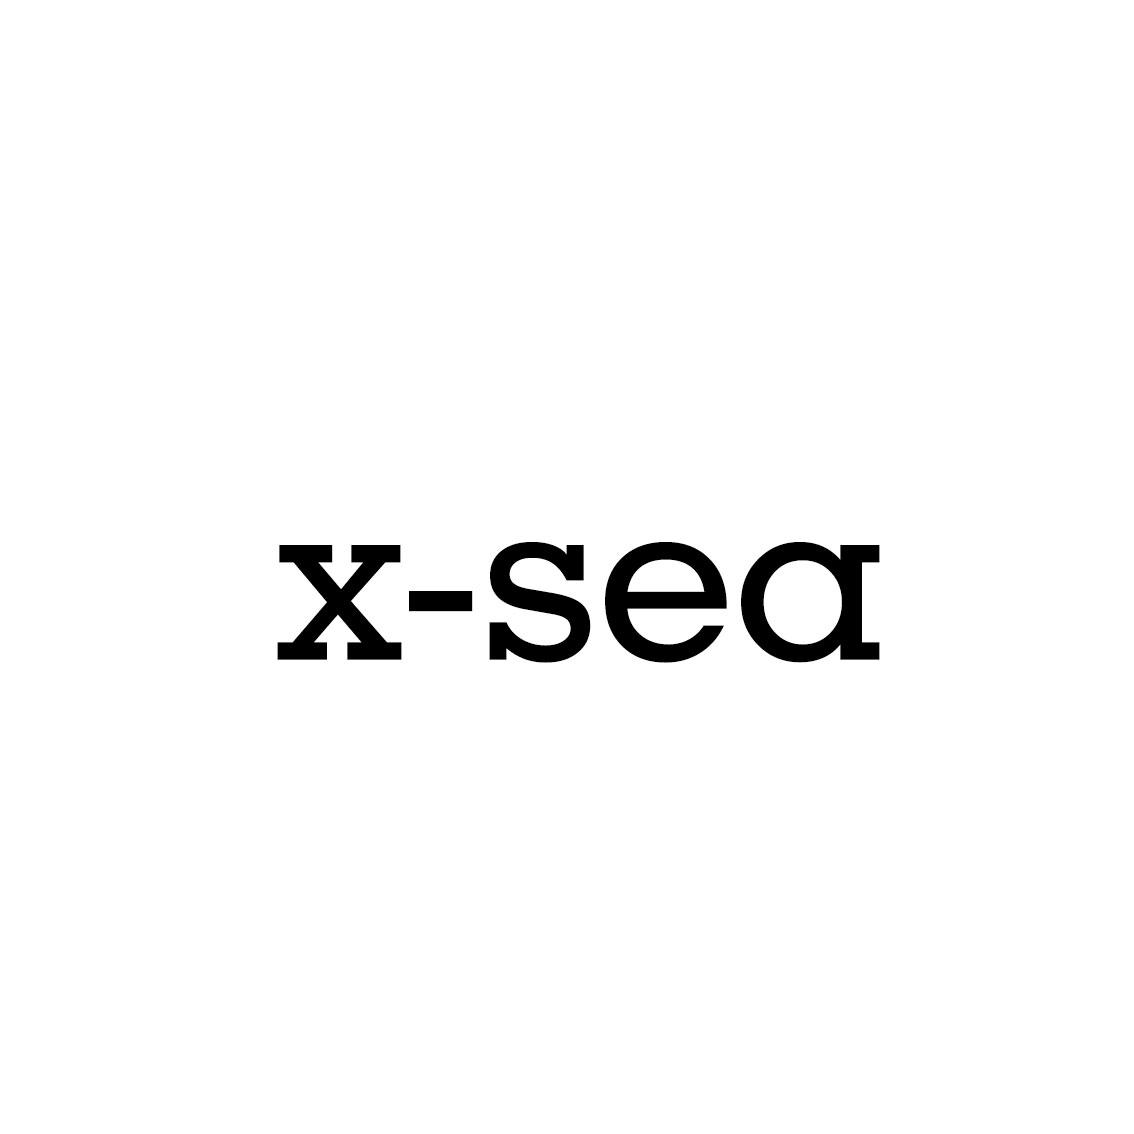 X-SEA